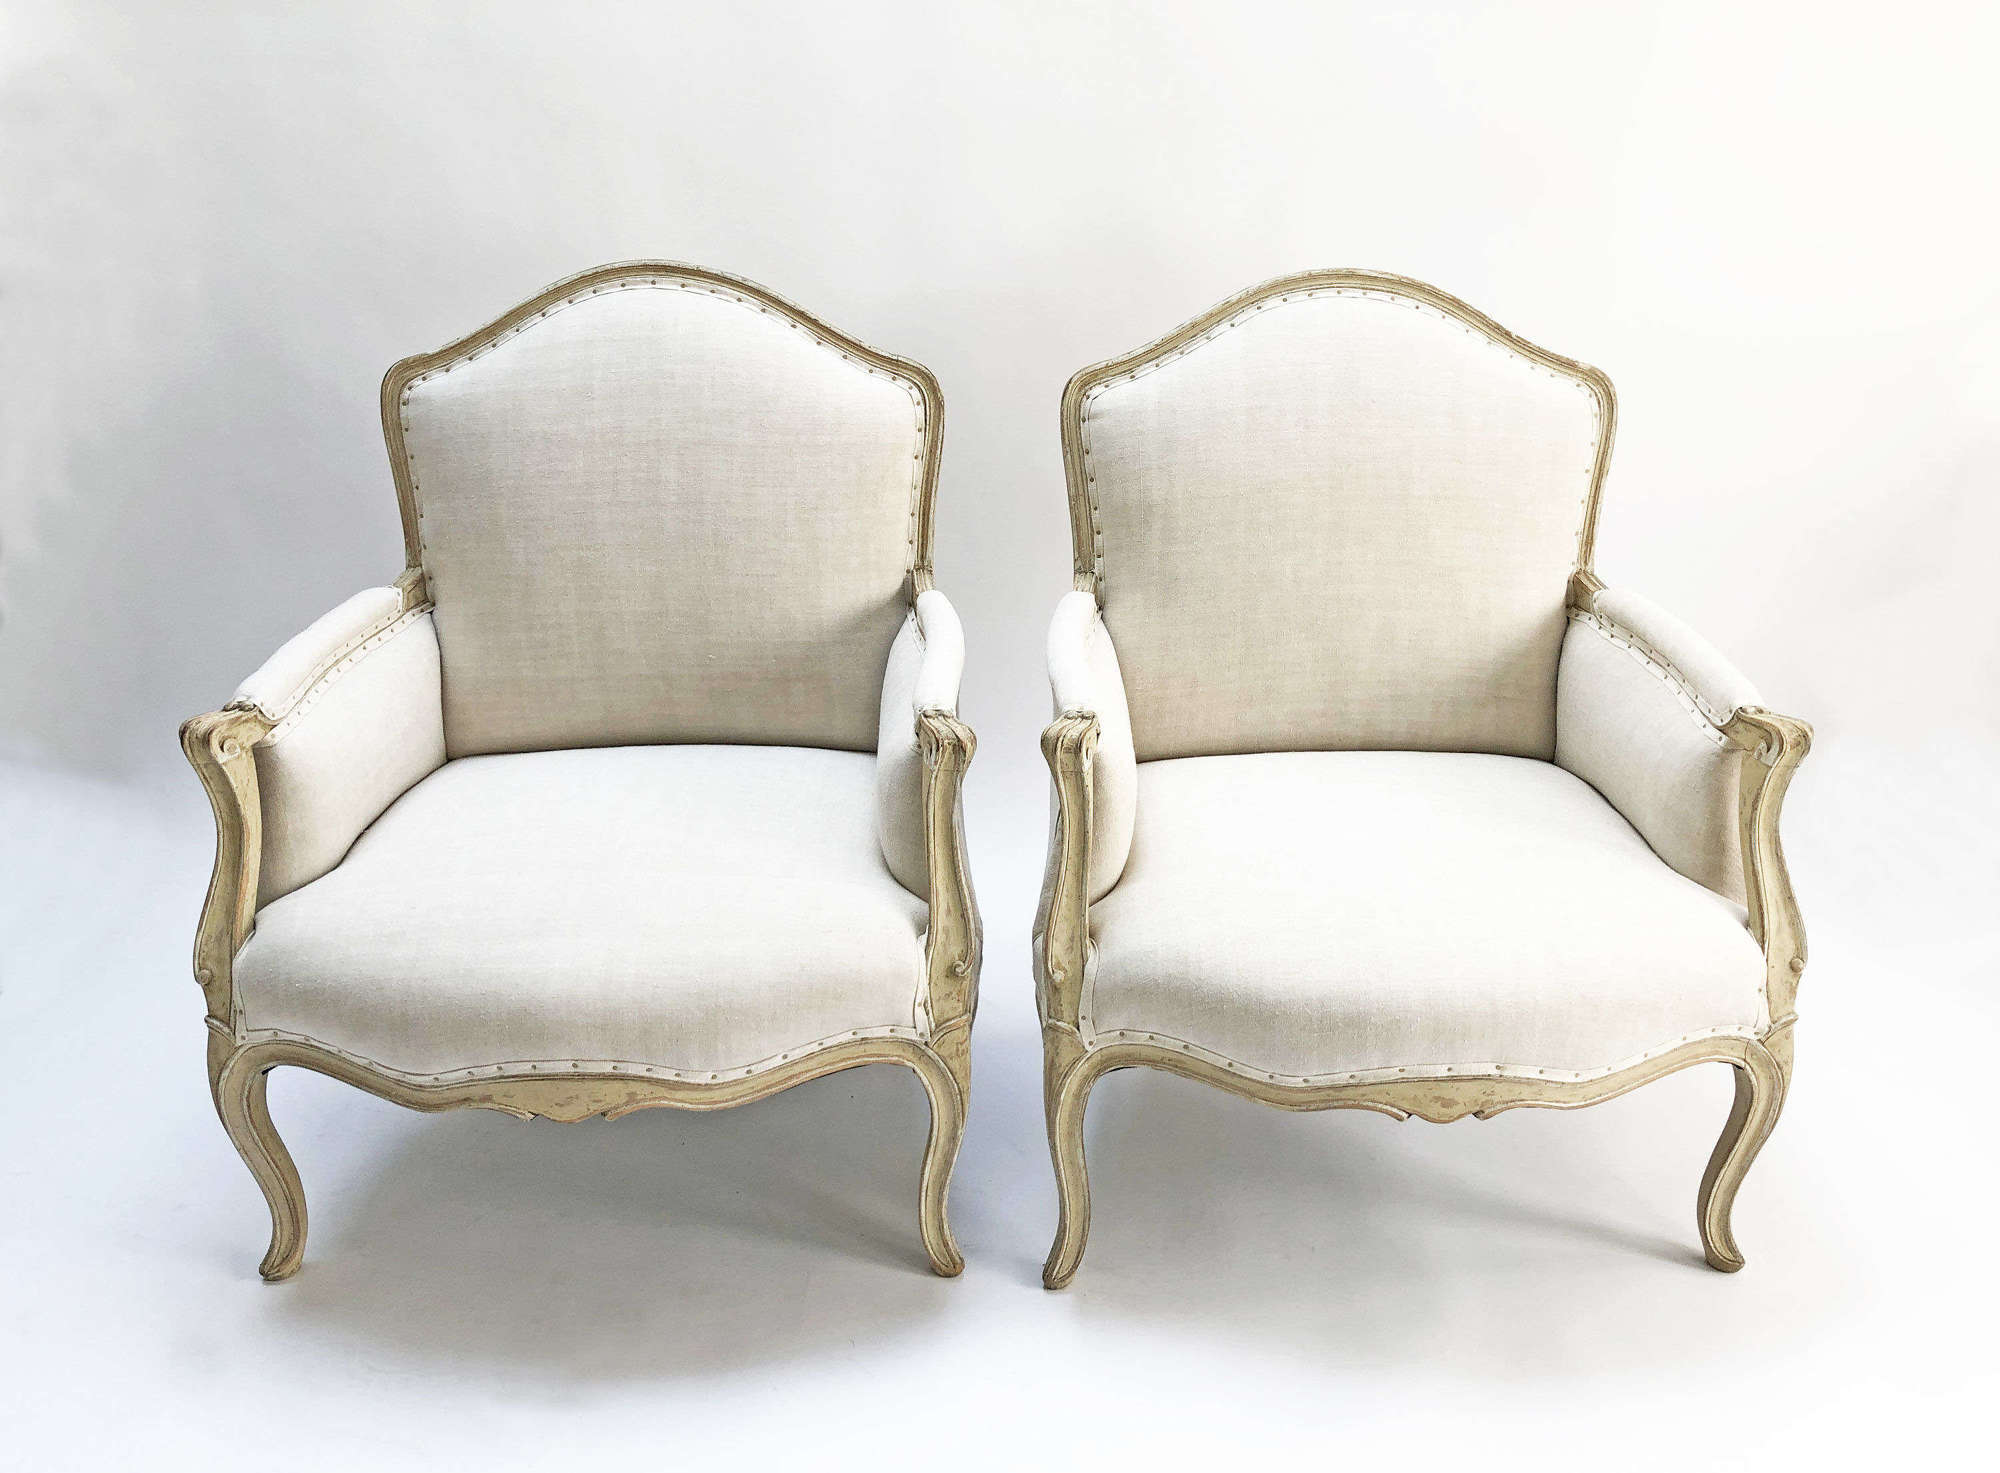 Pair of large 19th c Swedish Arm Chairs - C 1850